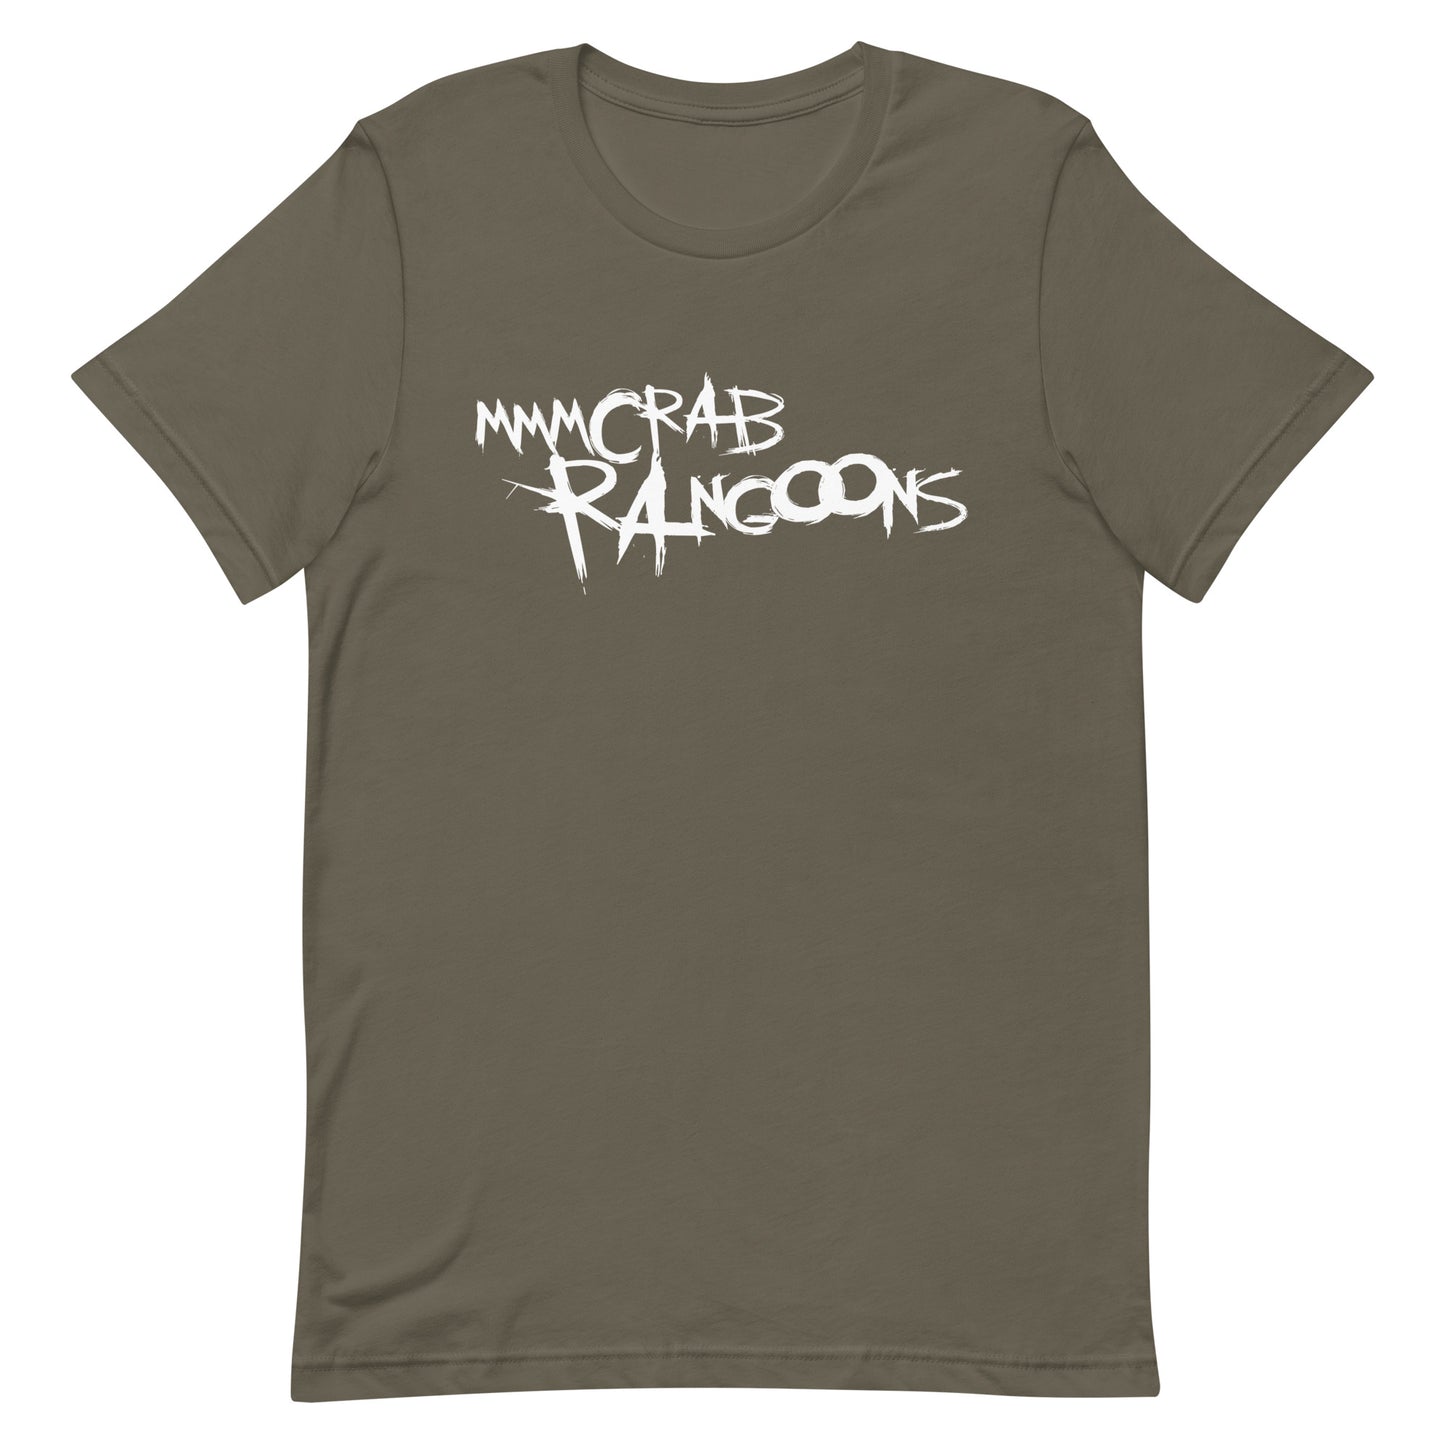 Mmm Crab Rangoons (MCR) Unisex t-shirt